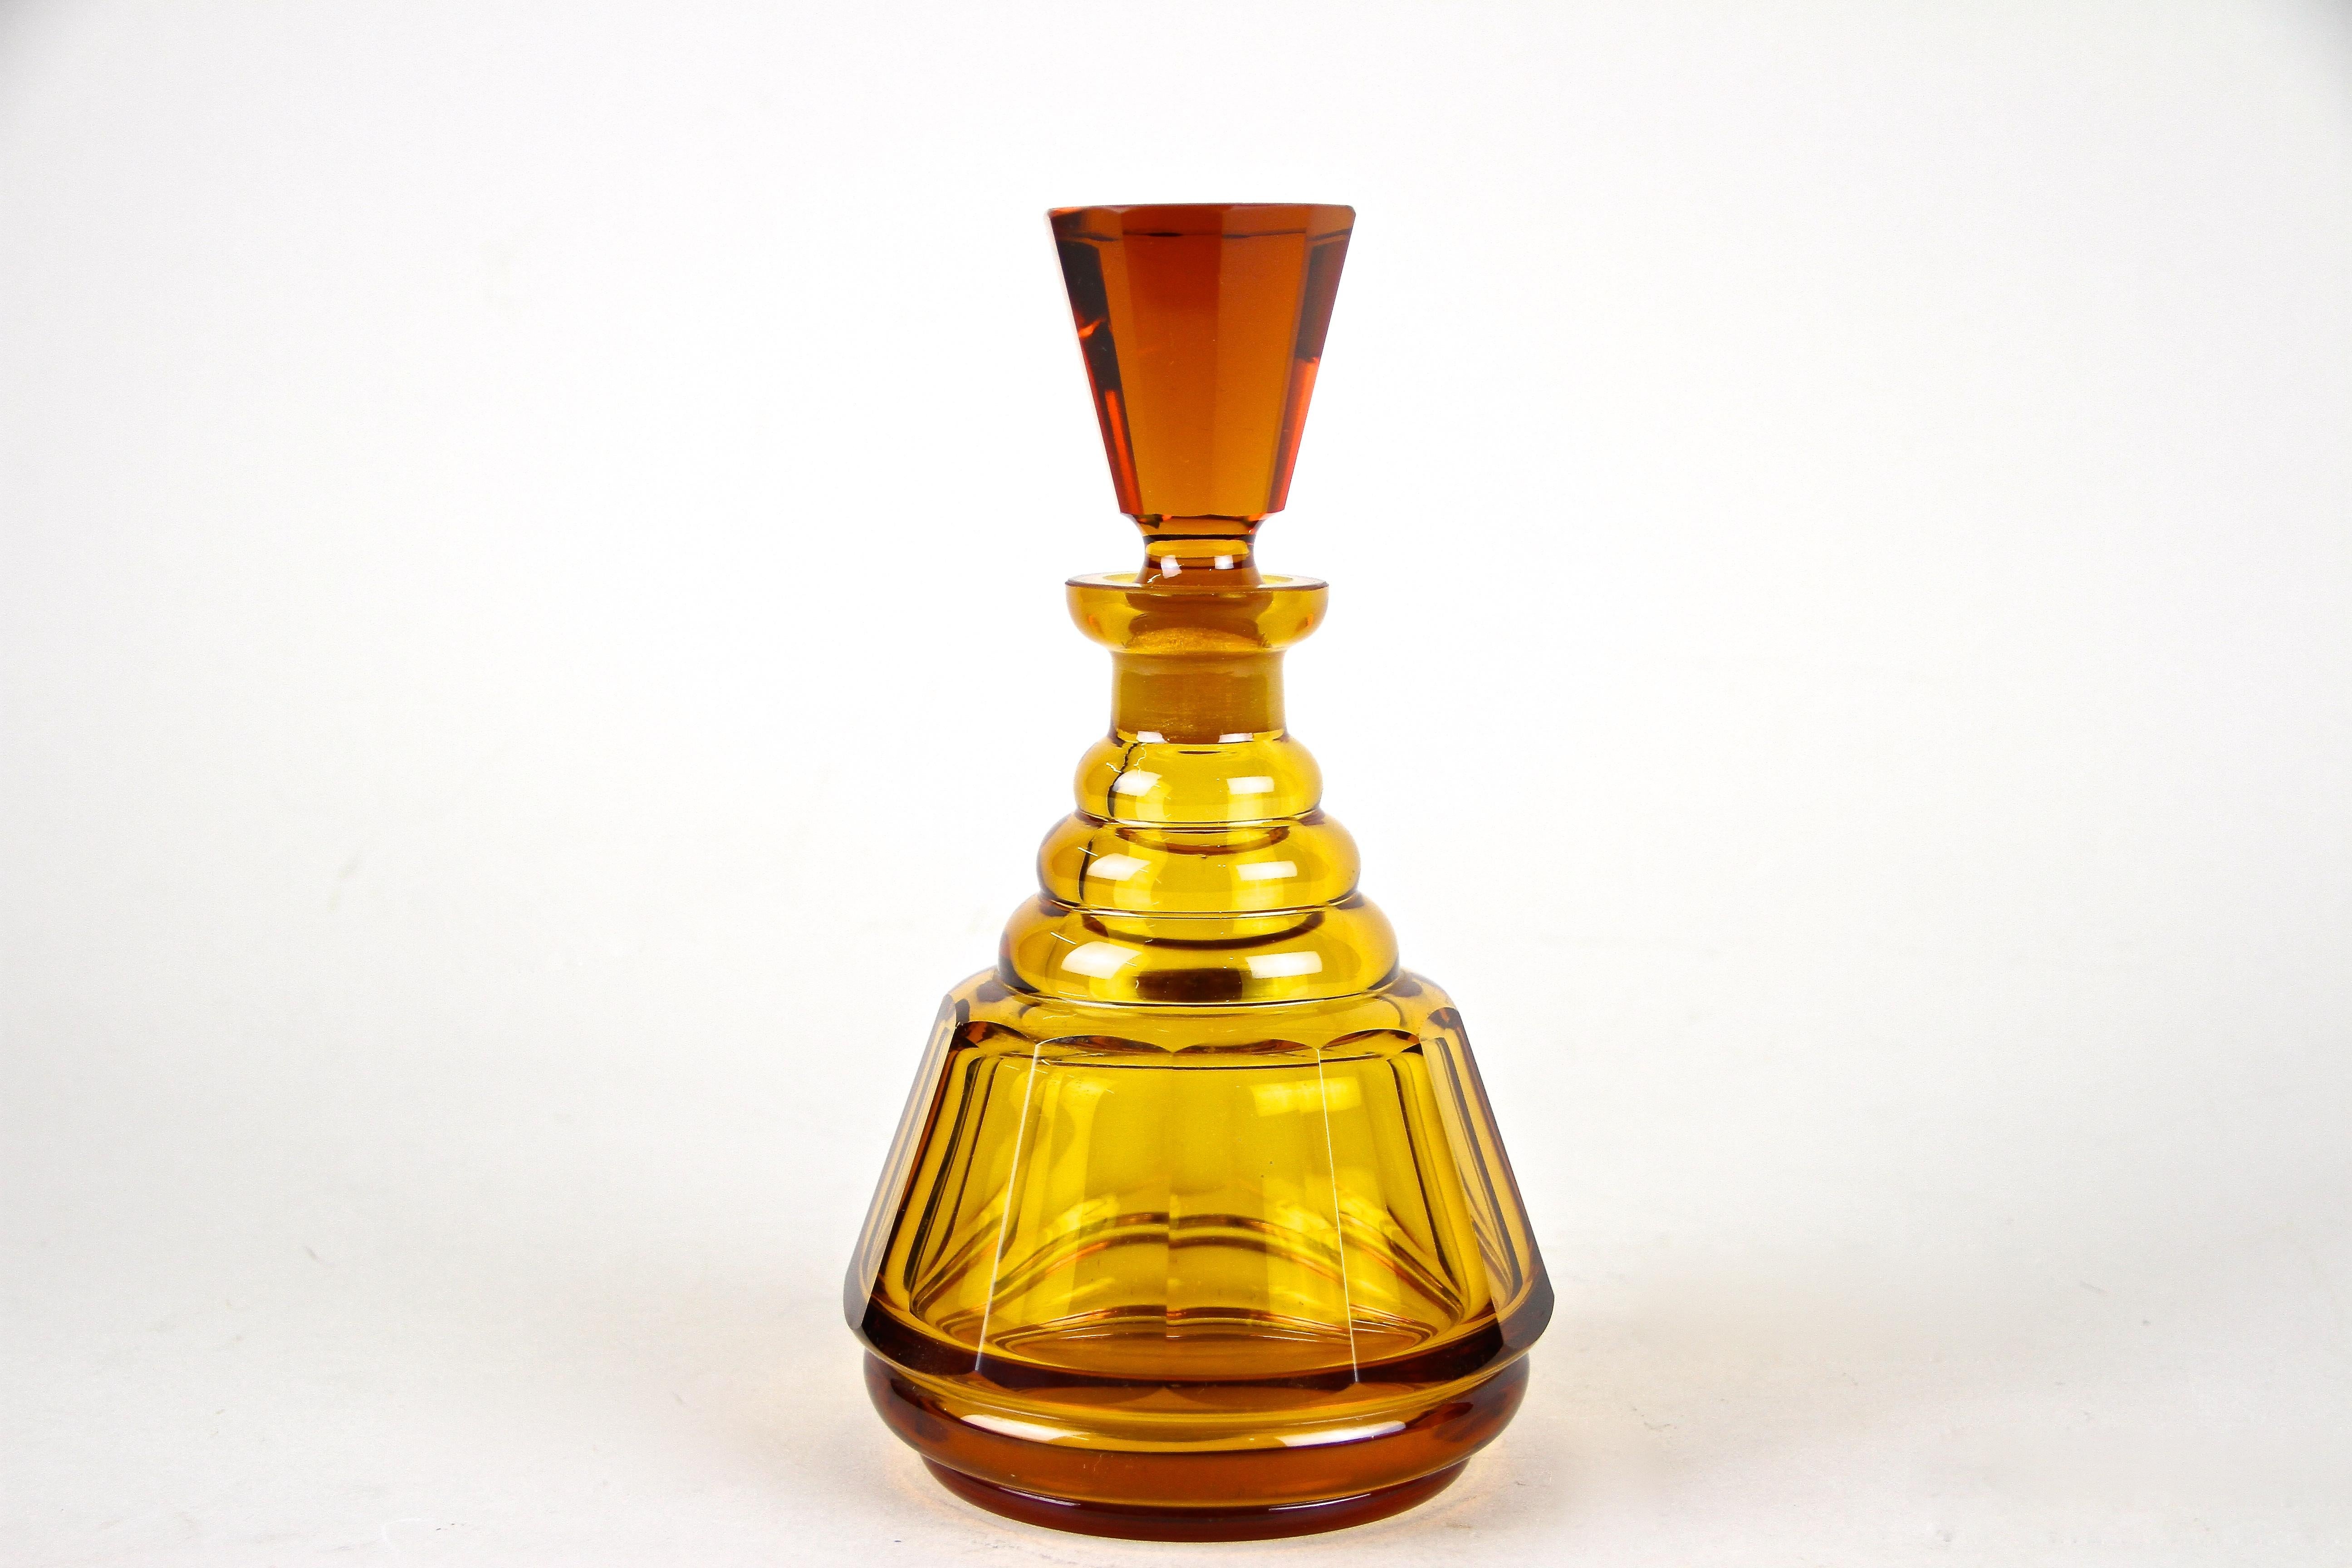 20th Century Amber-Colored Art Deco Glass Bottle with Stopper, Austria, circa 1920